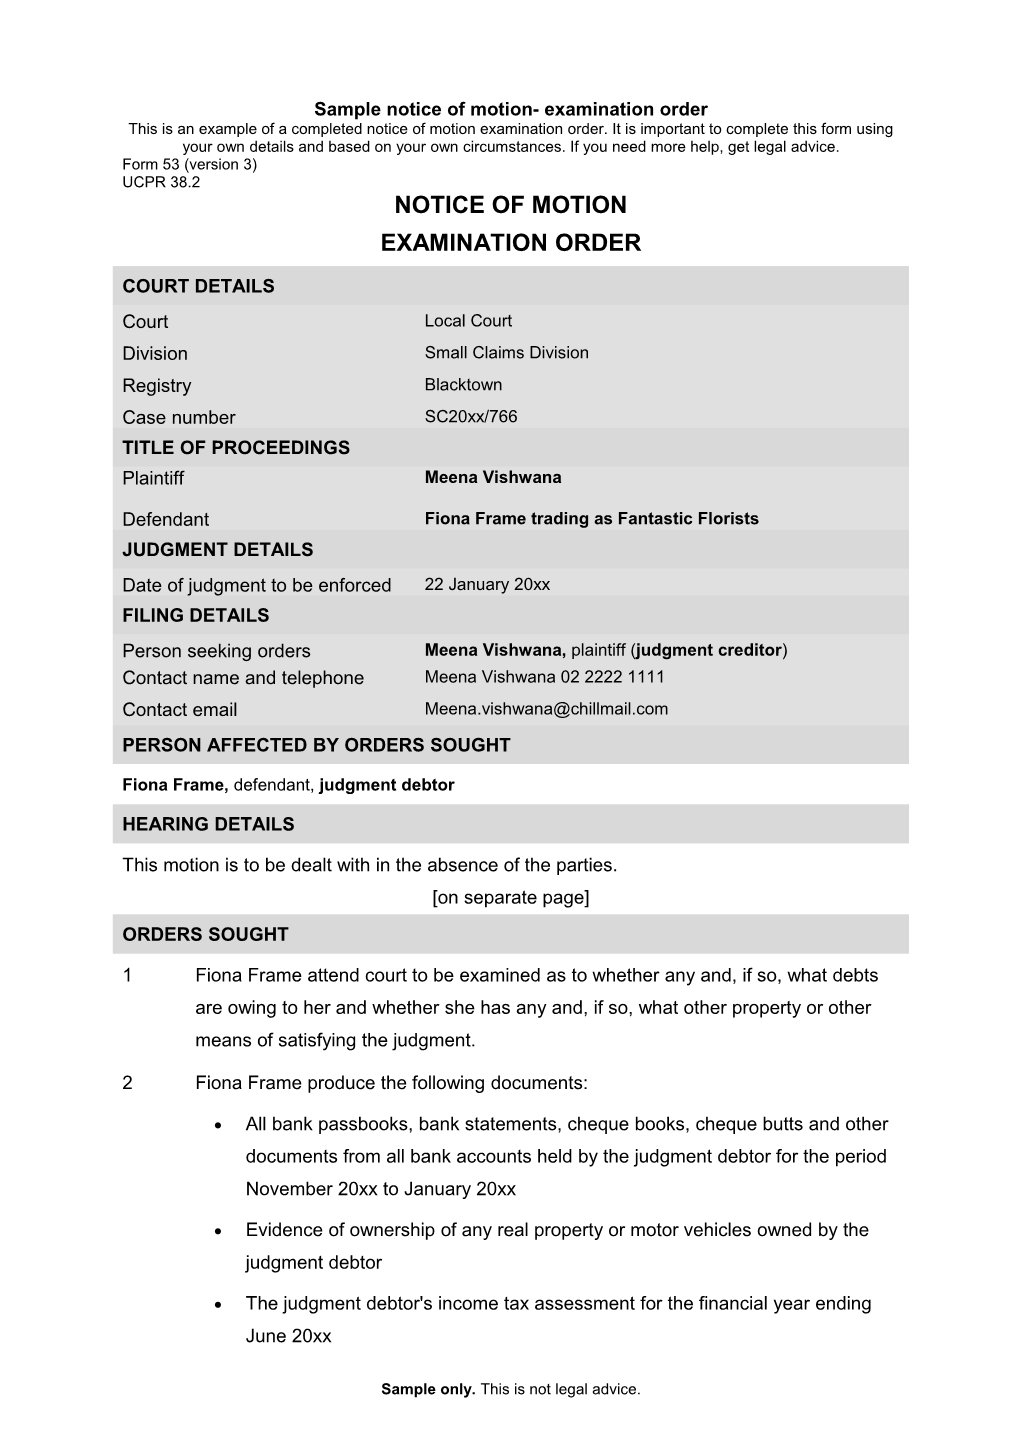 Form 53 - Notice of Motion Examination Order